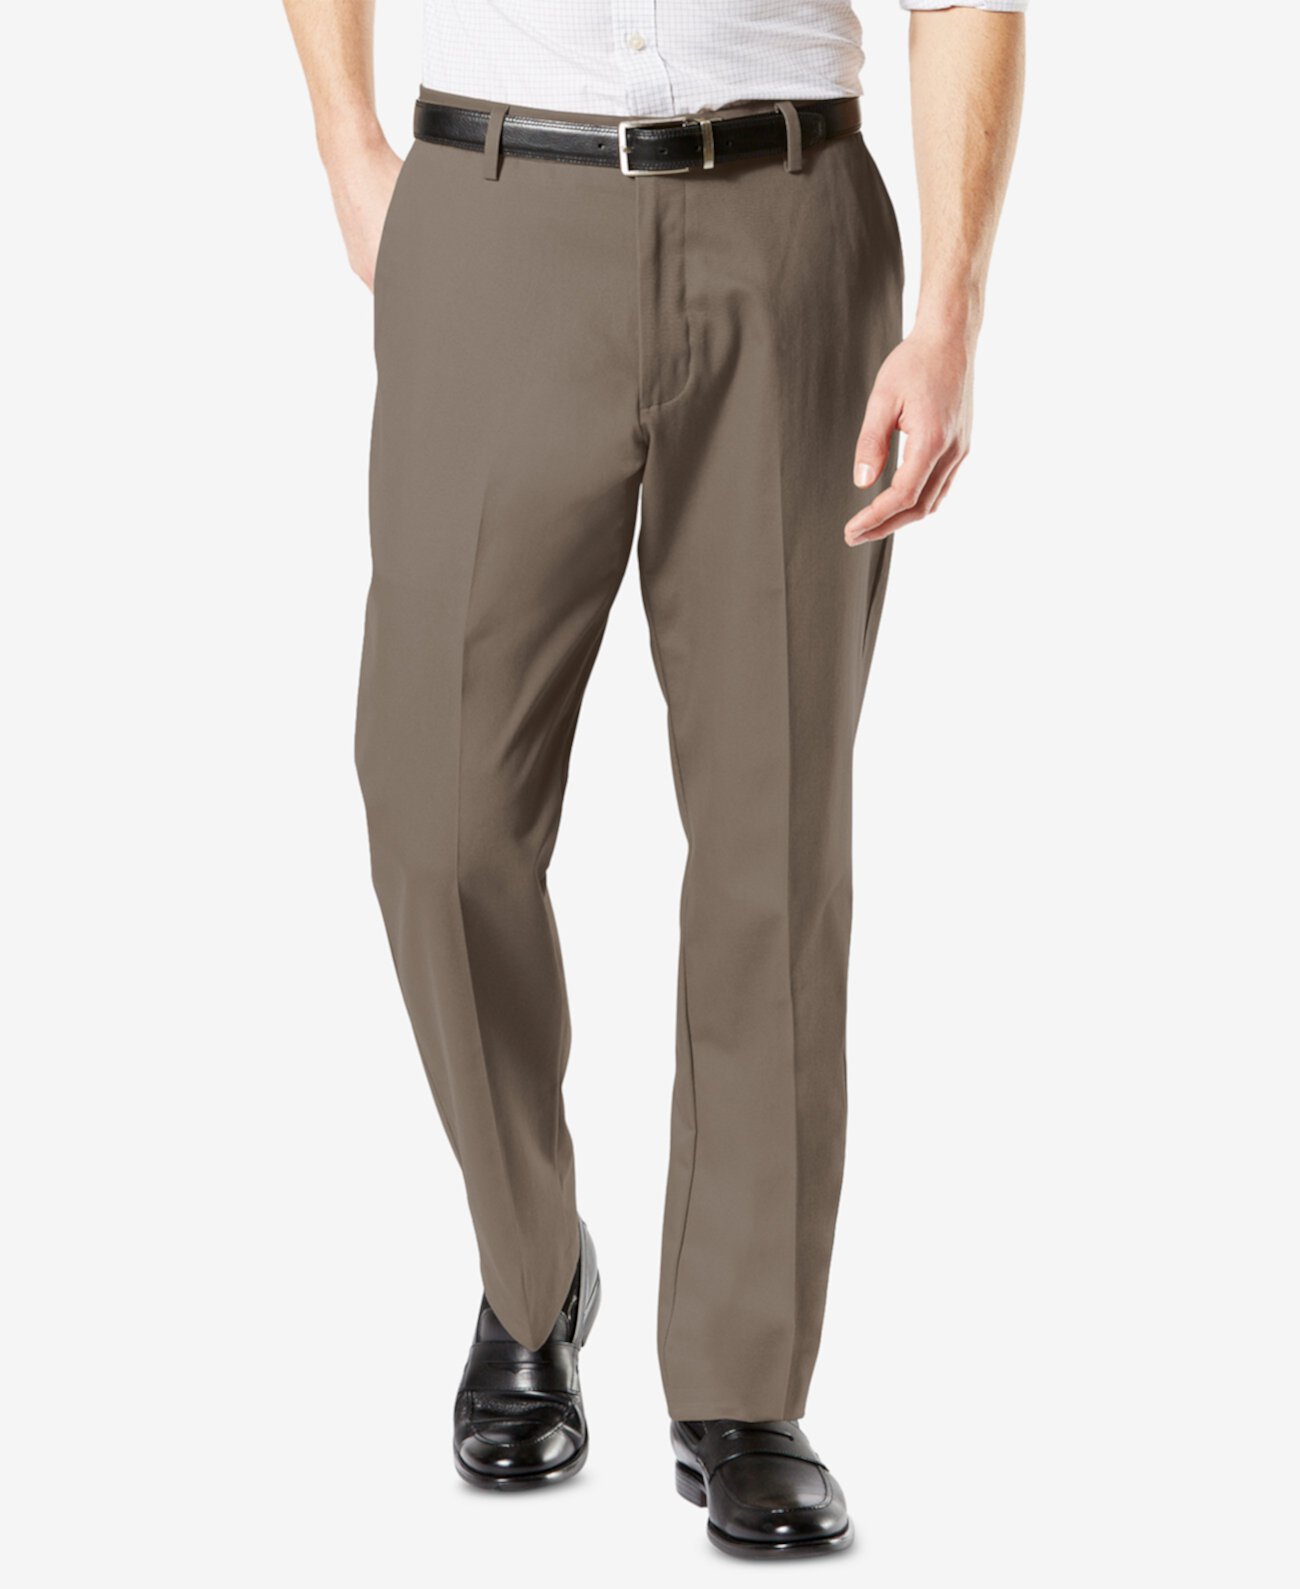 Мужские брюки цвета хаки со складками Signature Lux Cotton Classic Fit со складками Dockers